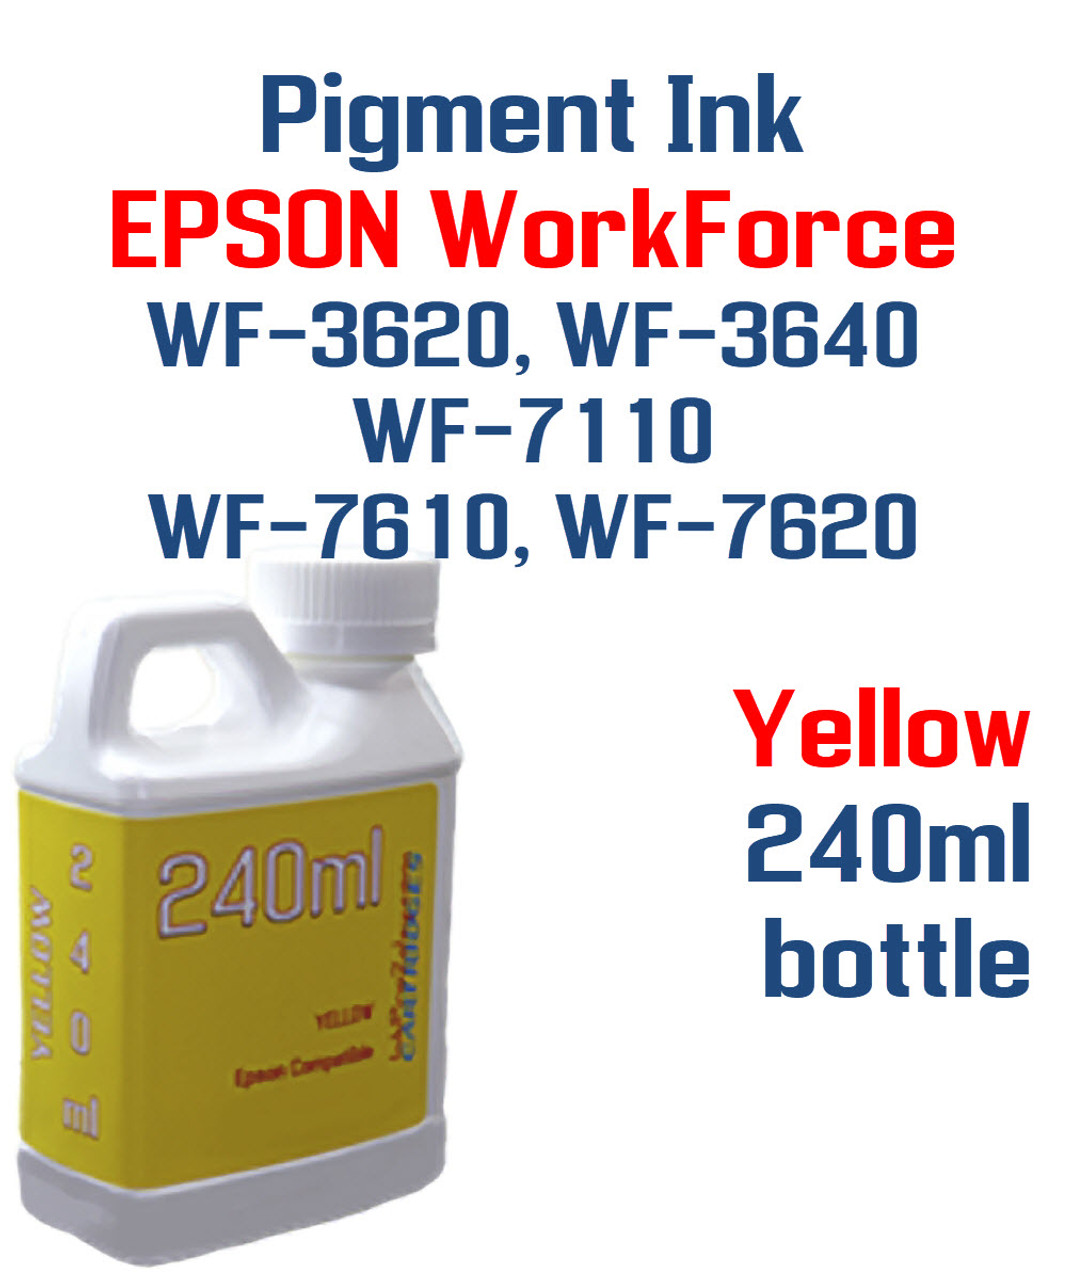 Yellow Pigment ink 240ml bottle Epson WF-3640 WF-7110 WF-7610 WF-7620 printers